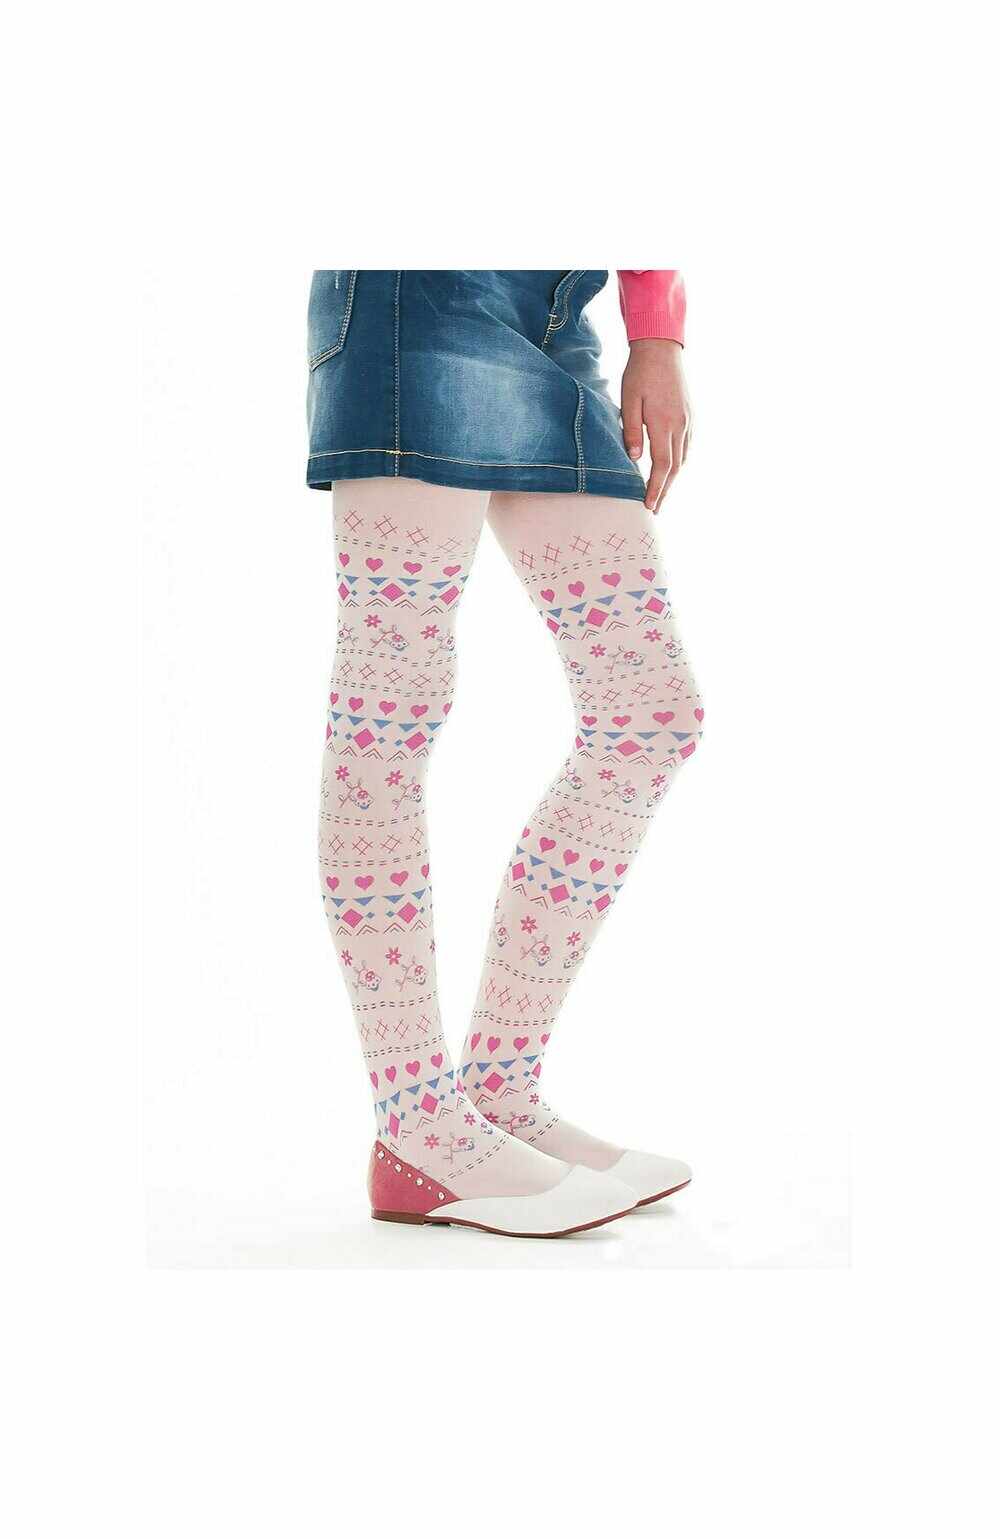 Ciorapi cu model pentru fetite 2-12 ani - Marilyn Pretty C84, 40 DEN - alb, roz